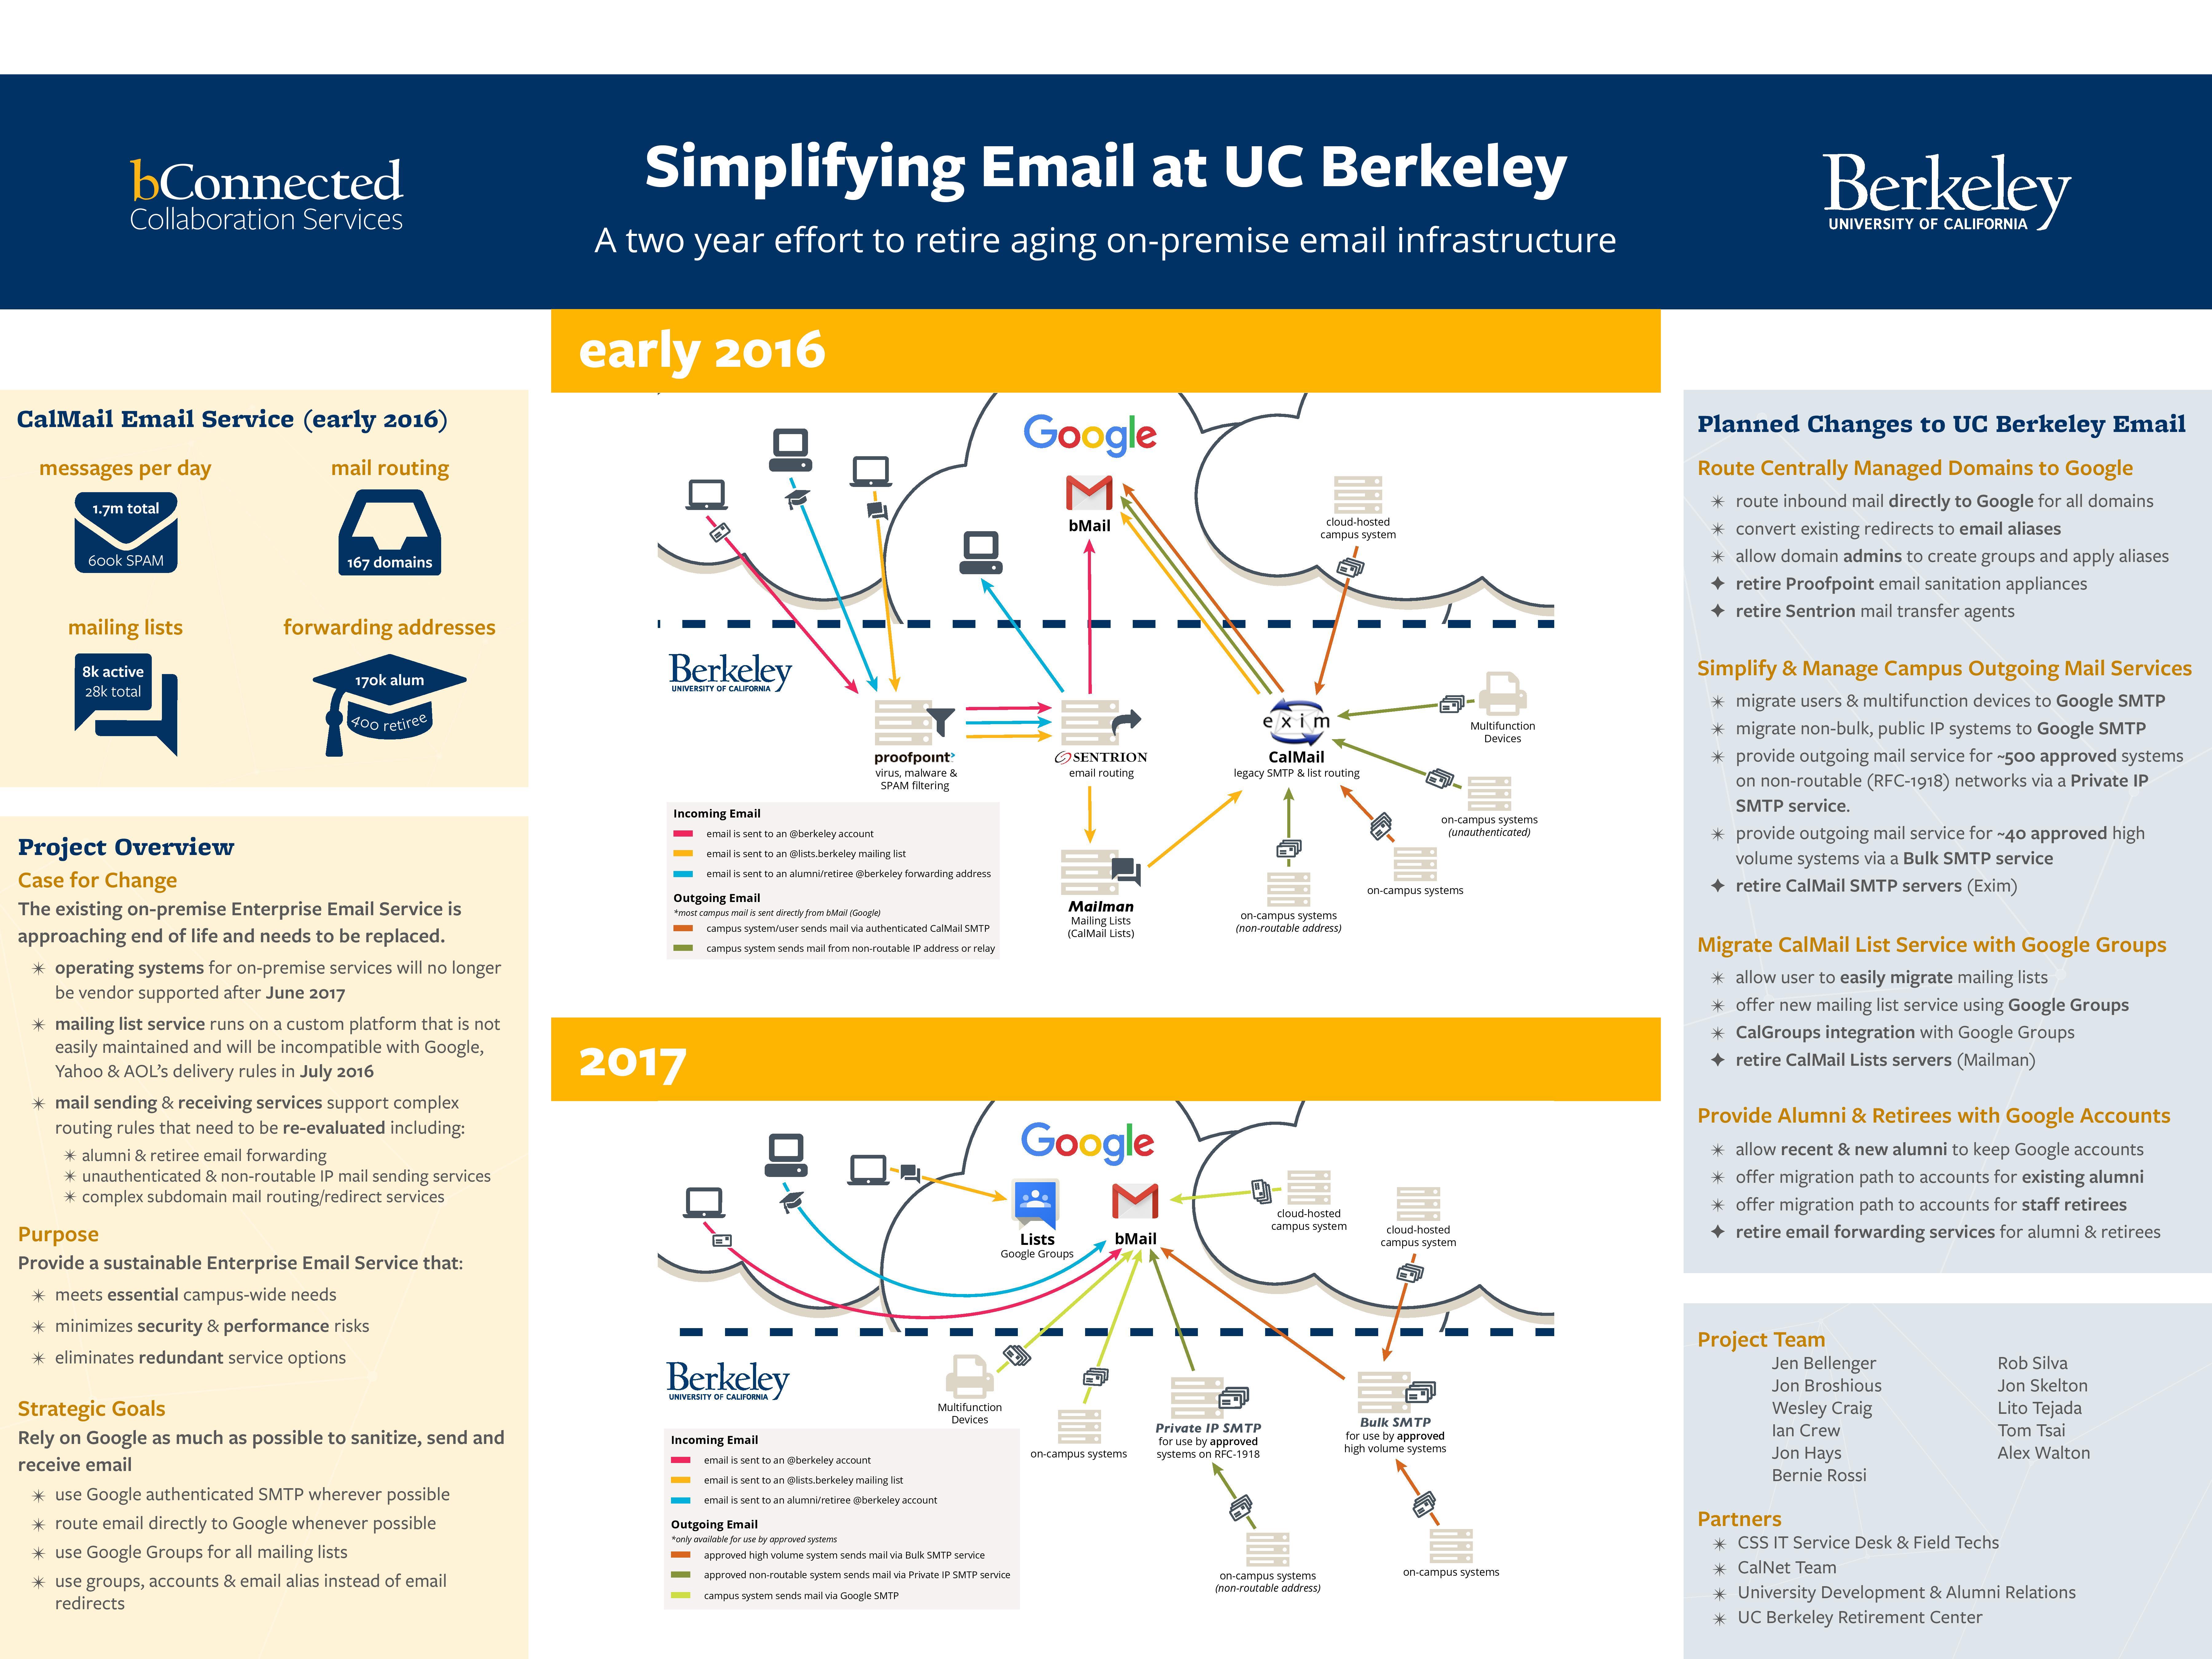 Email Simplification Program Details